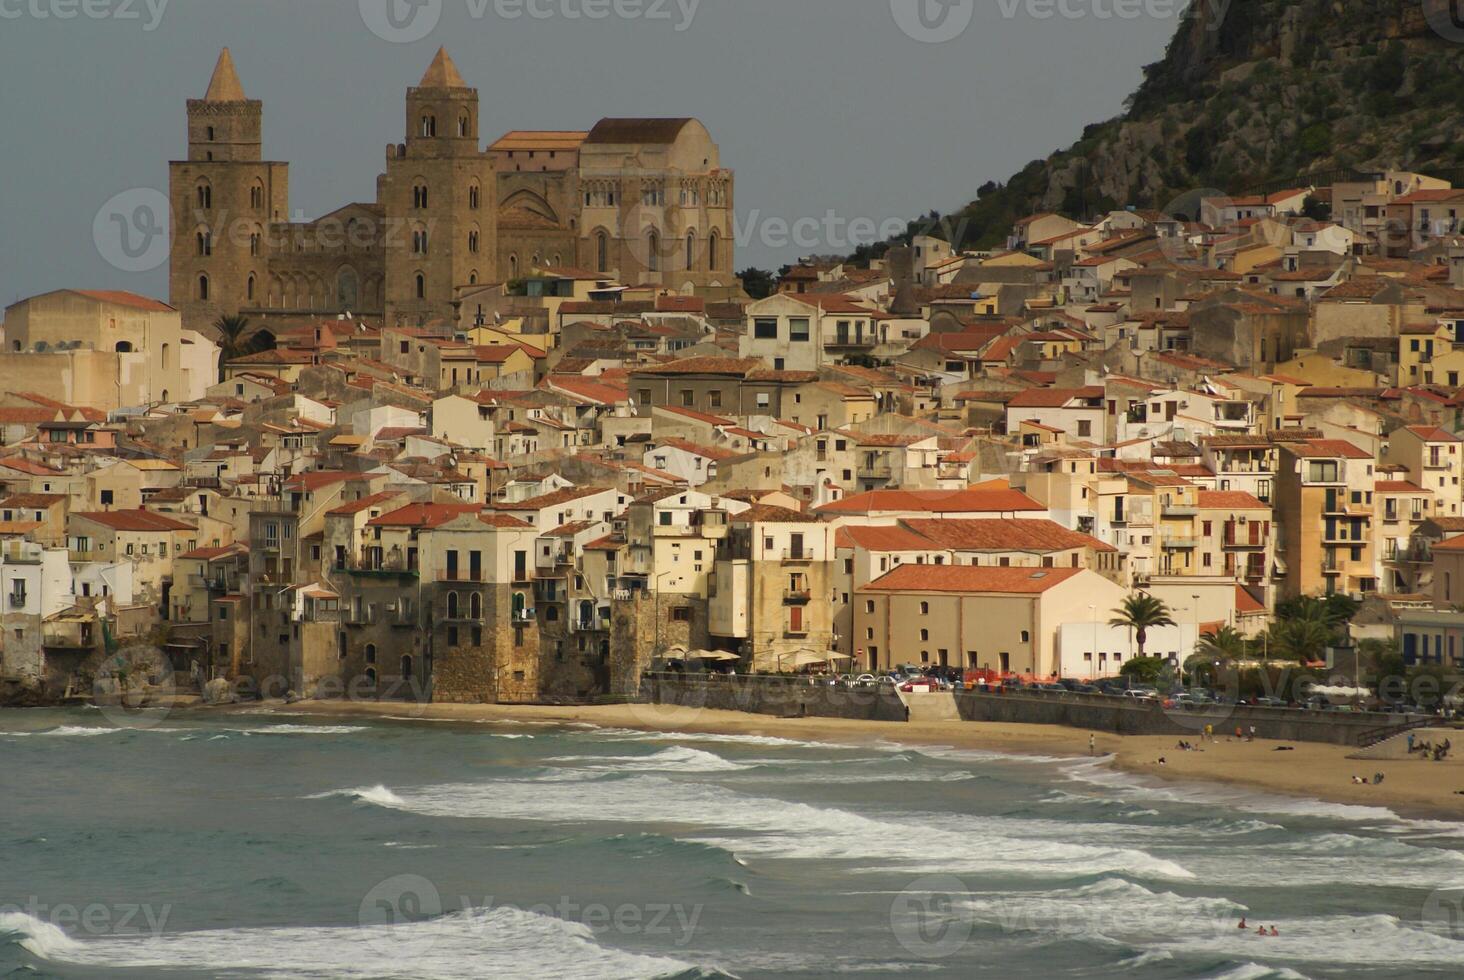 hus längs de strandlinje och katedral i bakgrund, cefalu, sicilien foto